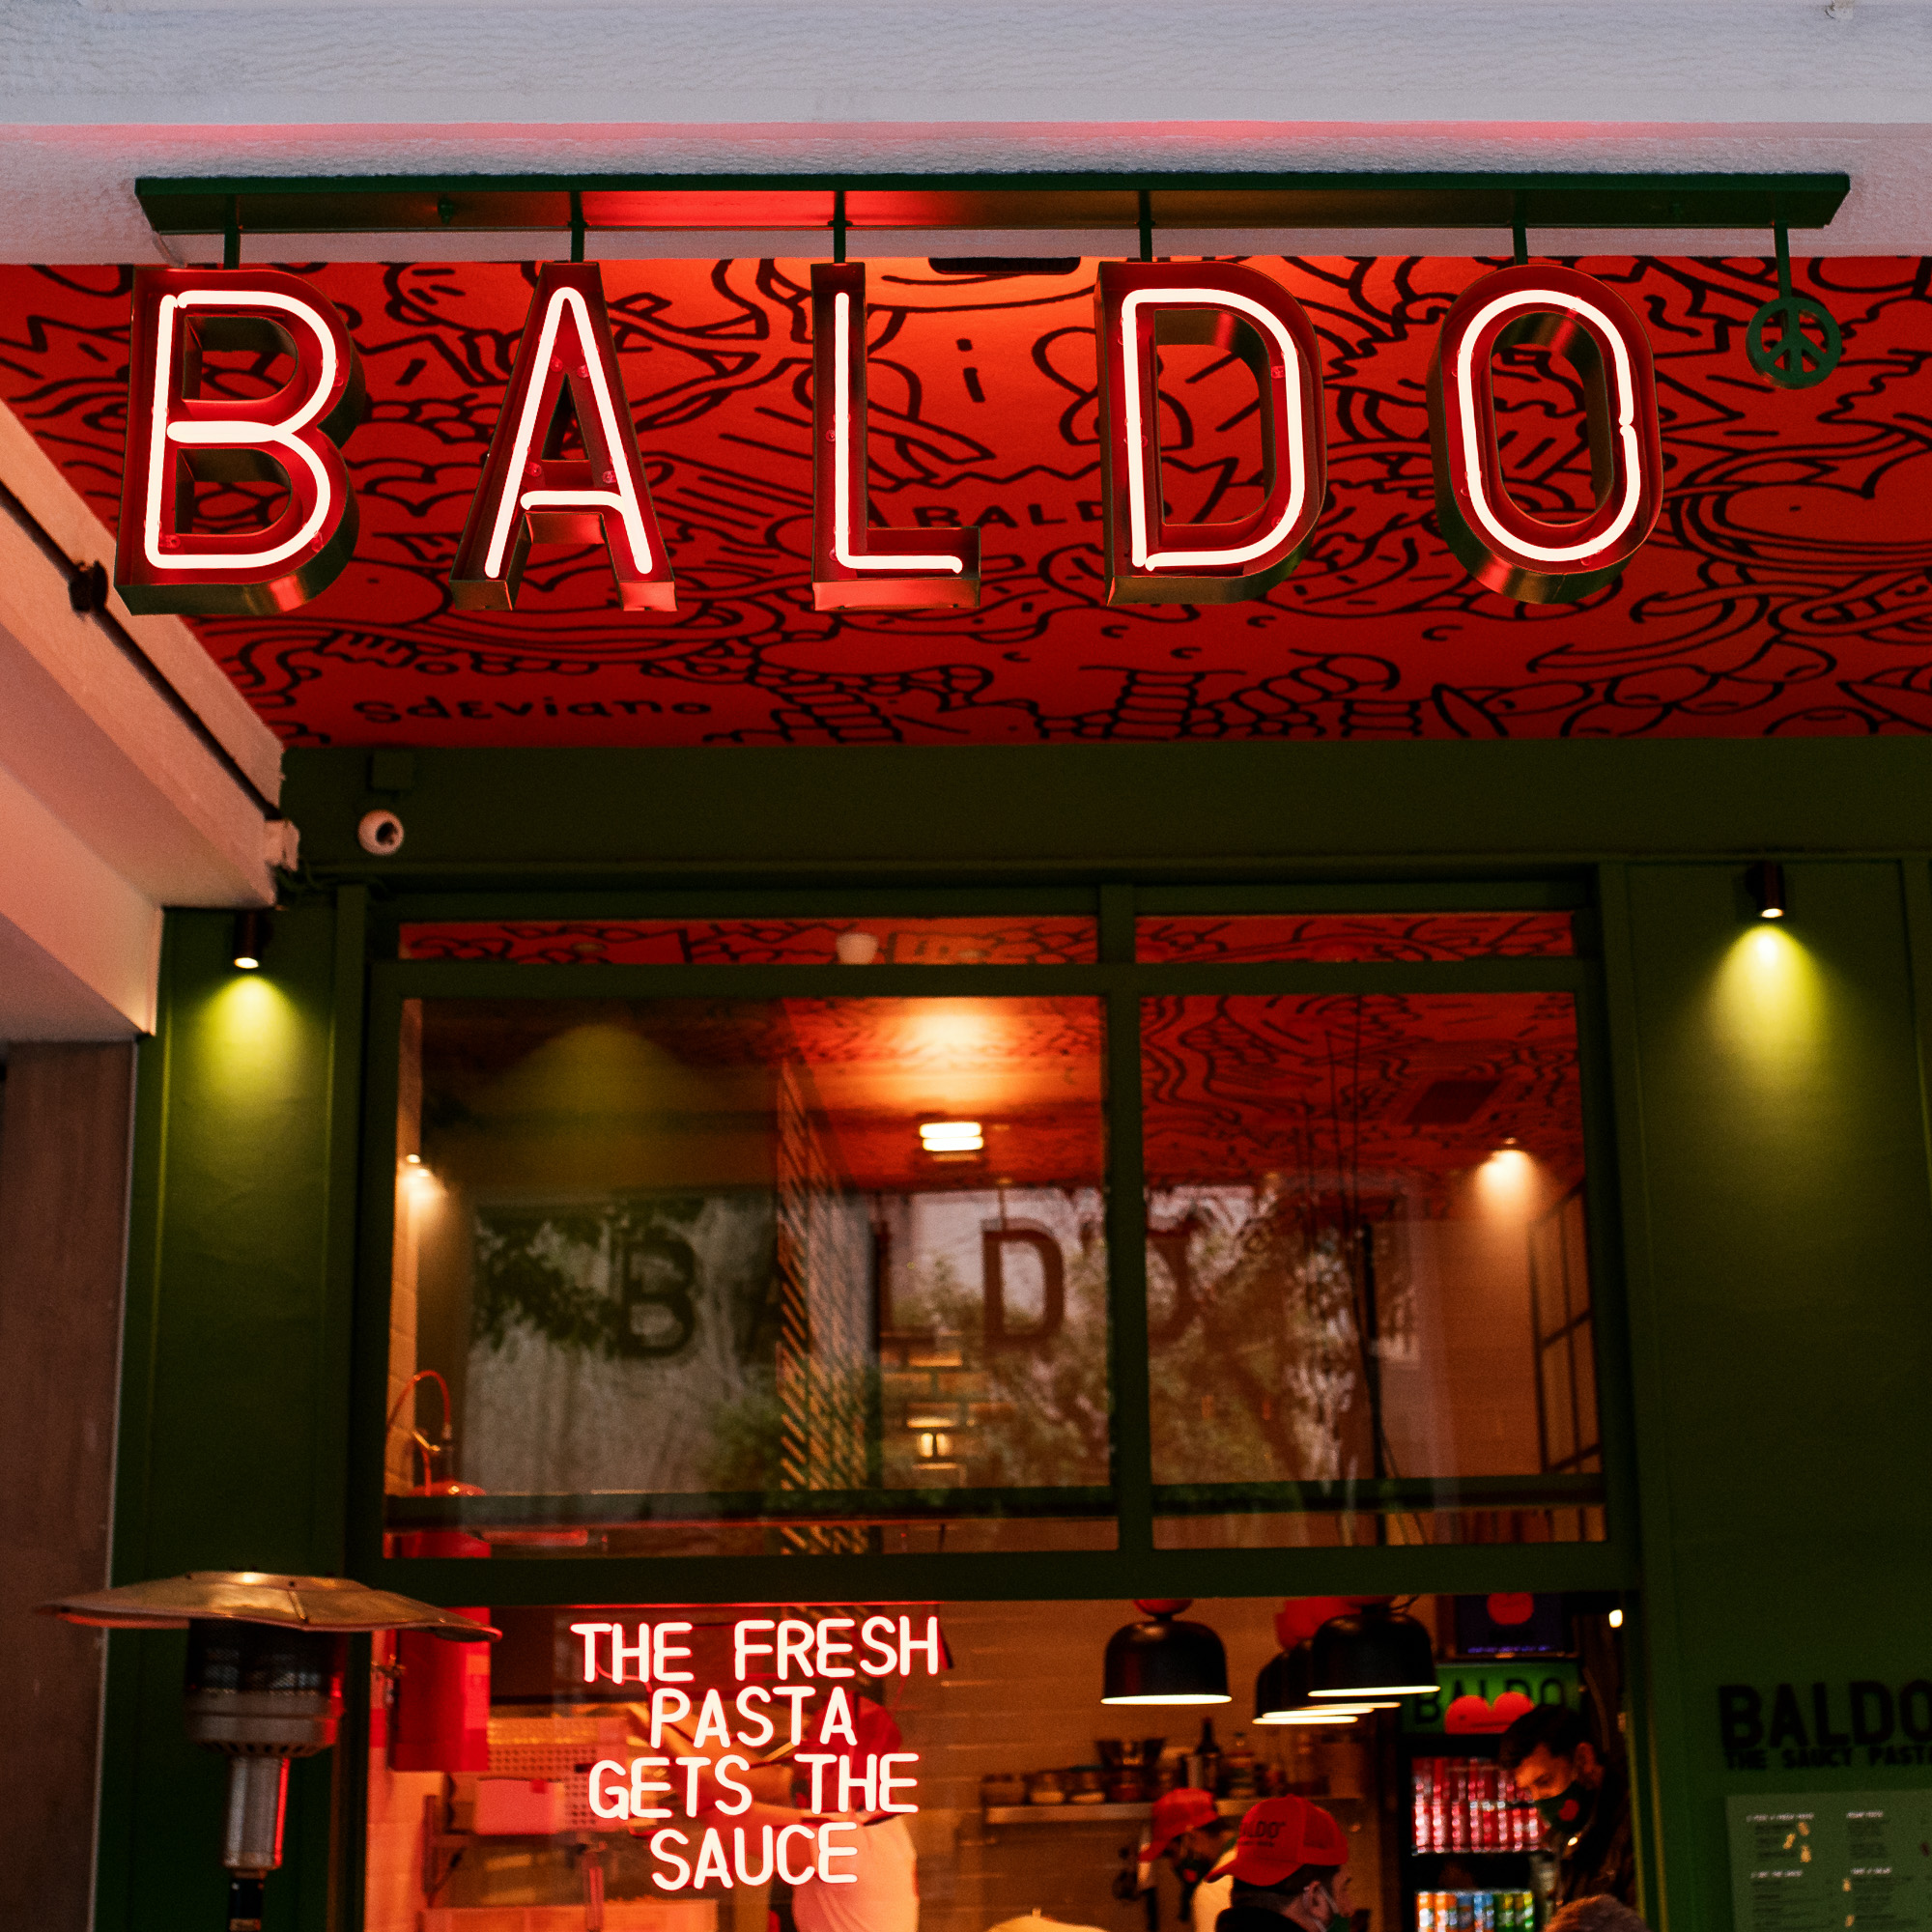 Baldo The Saucy Pasta: Μοντέρνο pasta concept με φρέσκο γευστικό ύφος